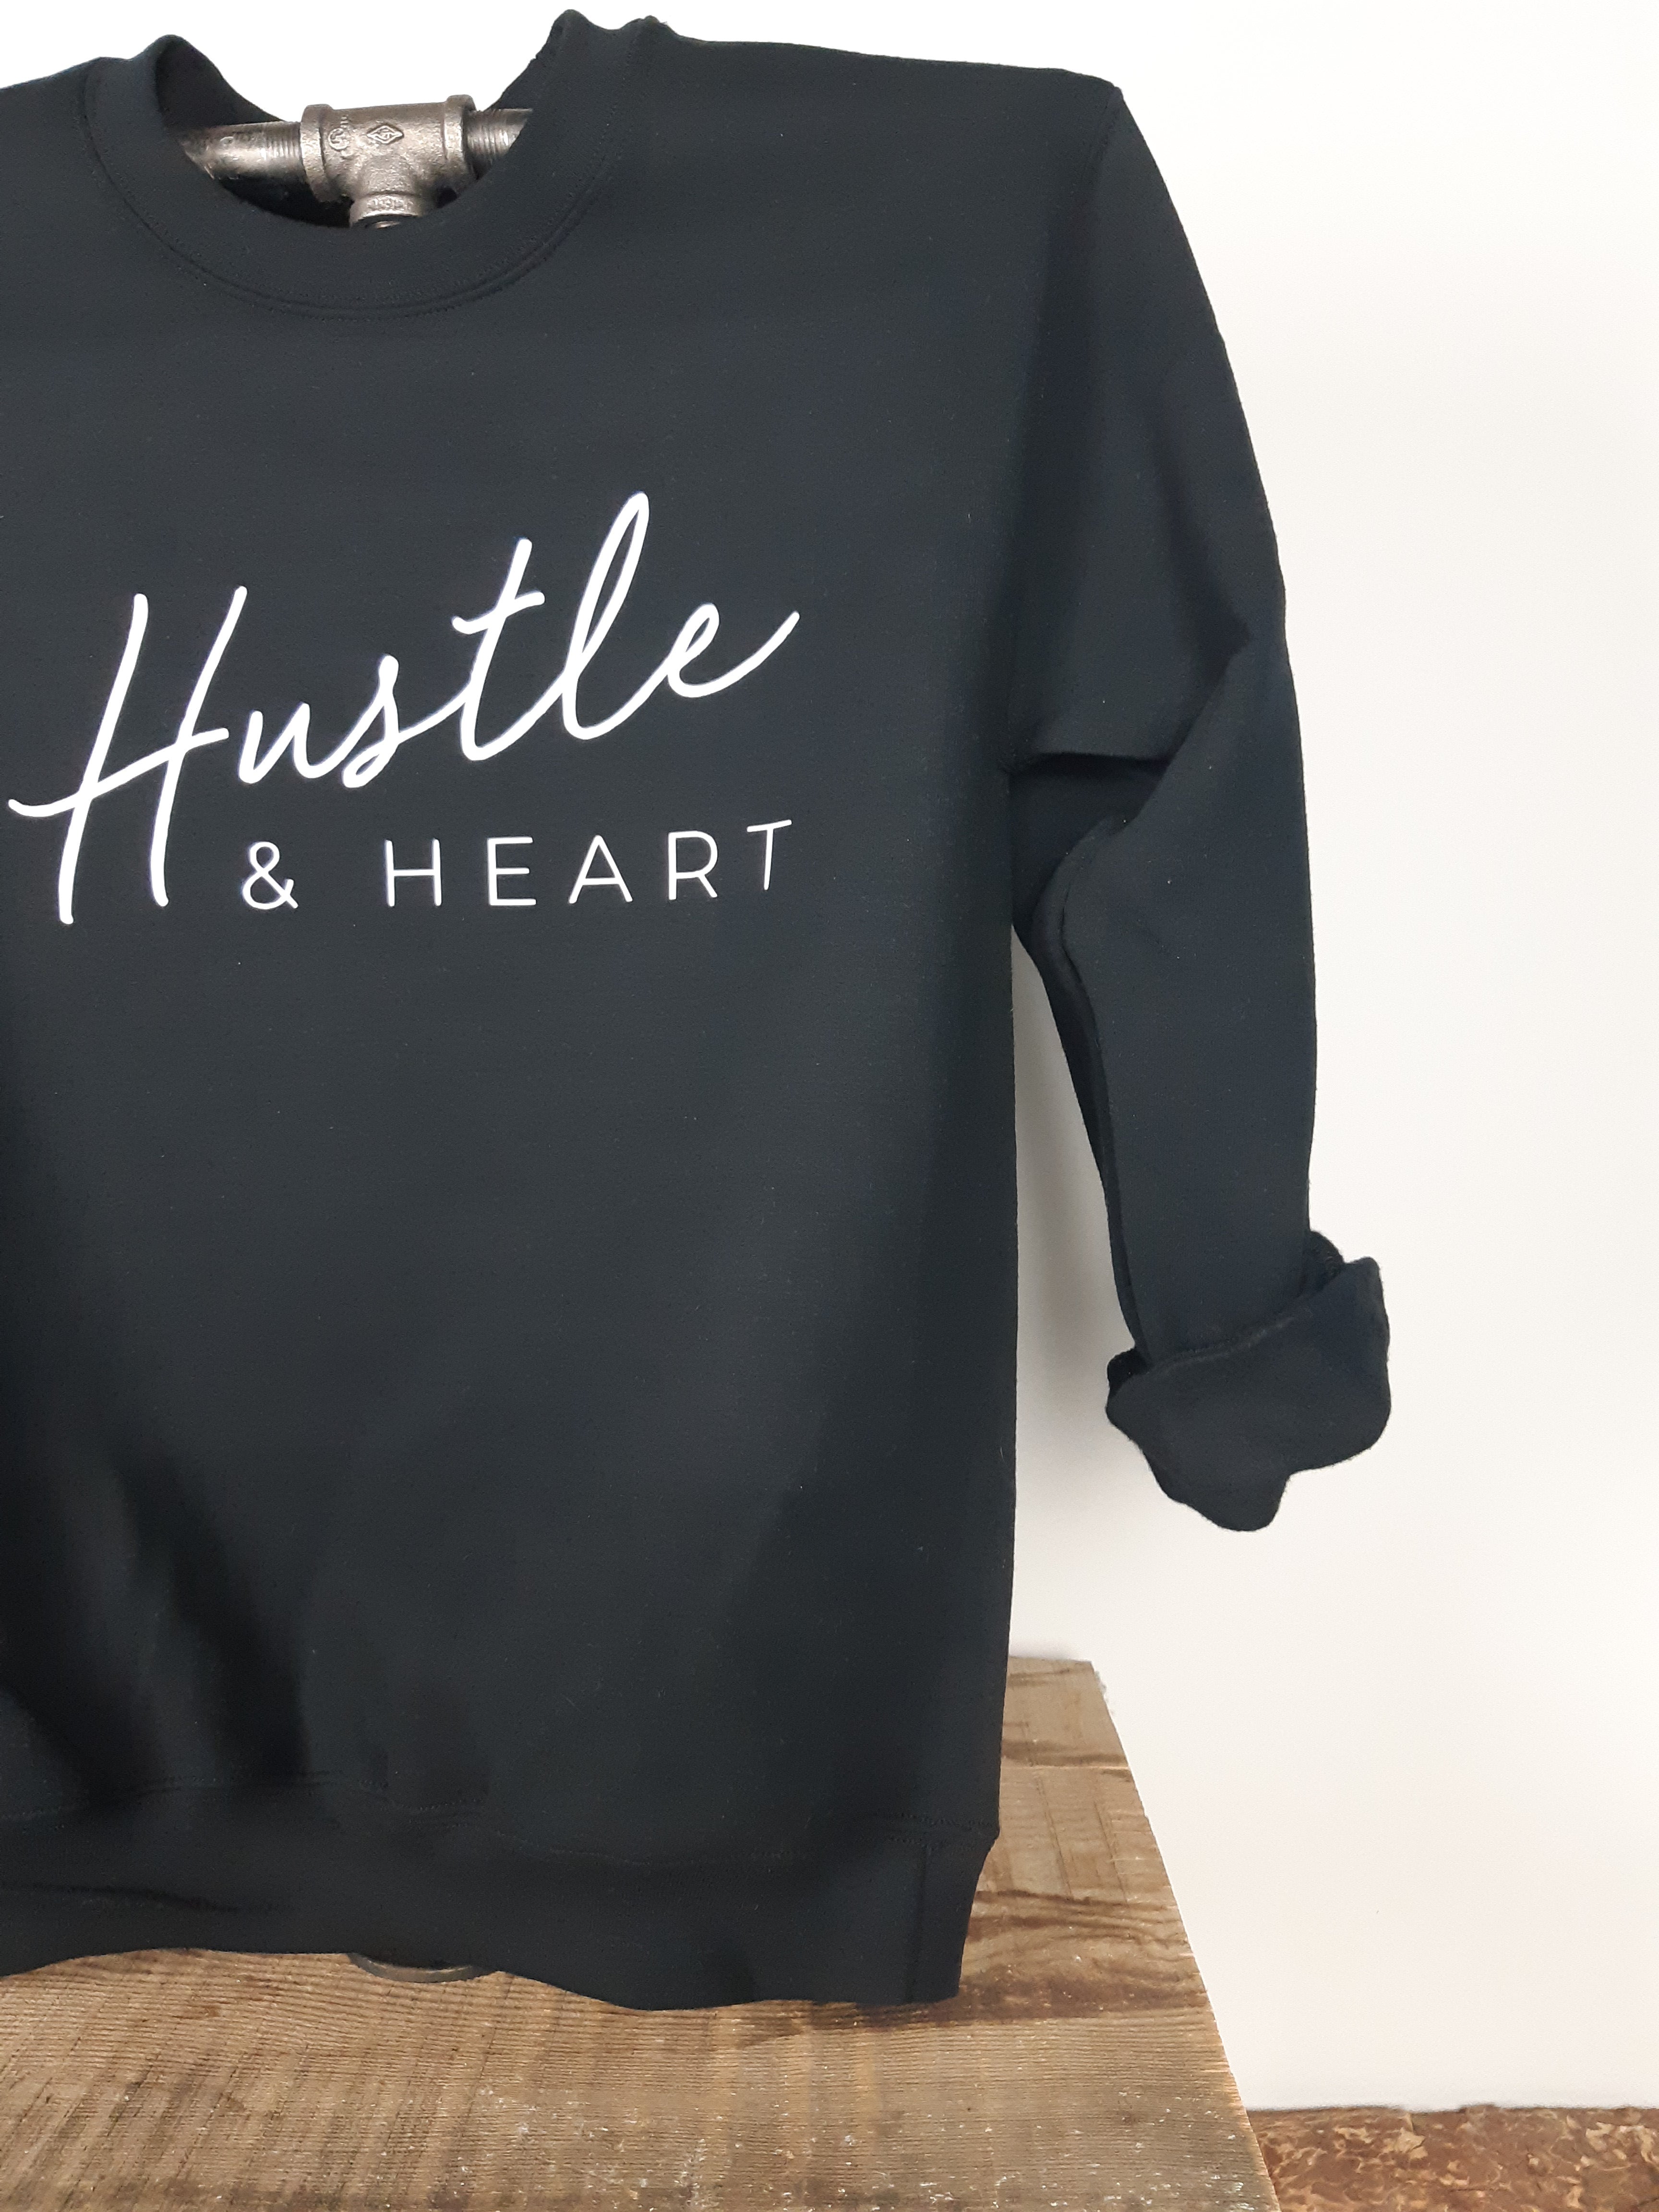 Hustle & Heart Black Crewneck